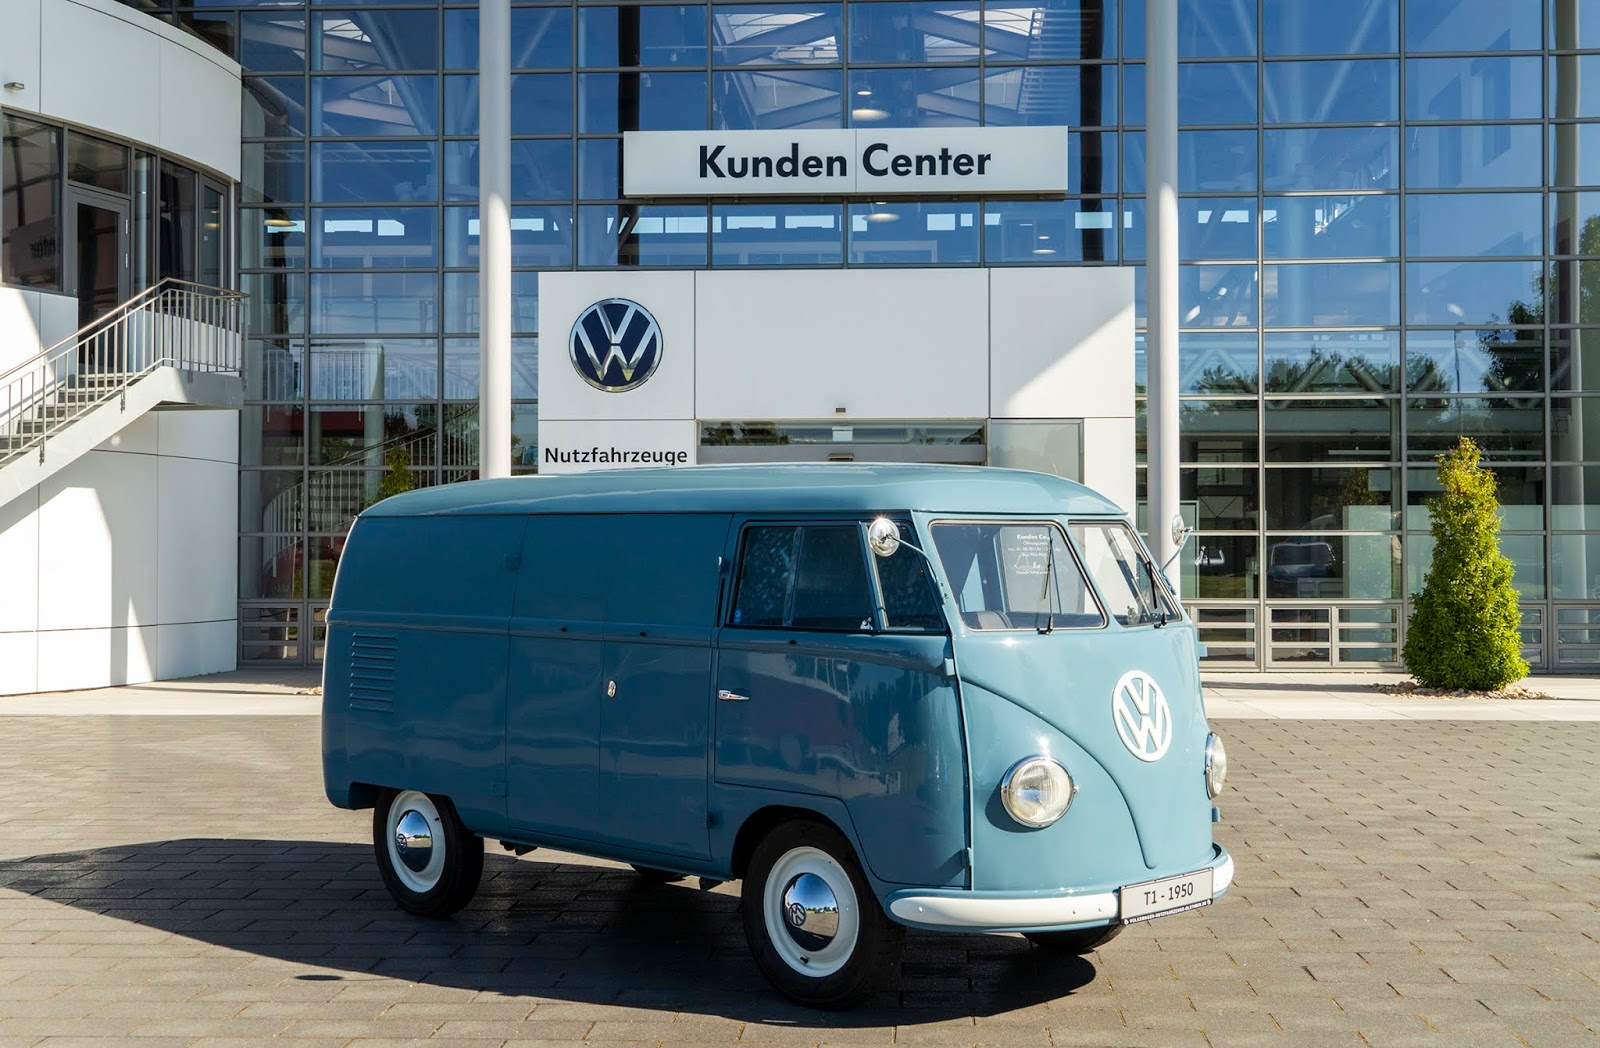 VOLKSWAGEN2BTRANSPORTER2BT12B 2BSOFIE 1 Εβδομηκοστά γενέθλια για το πιο παλιό Volkswagen Transporter